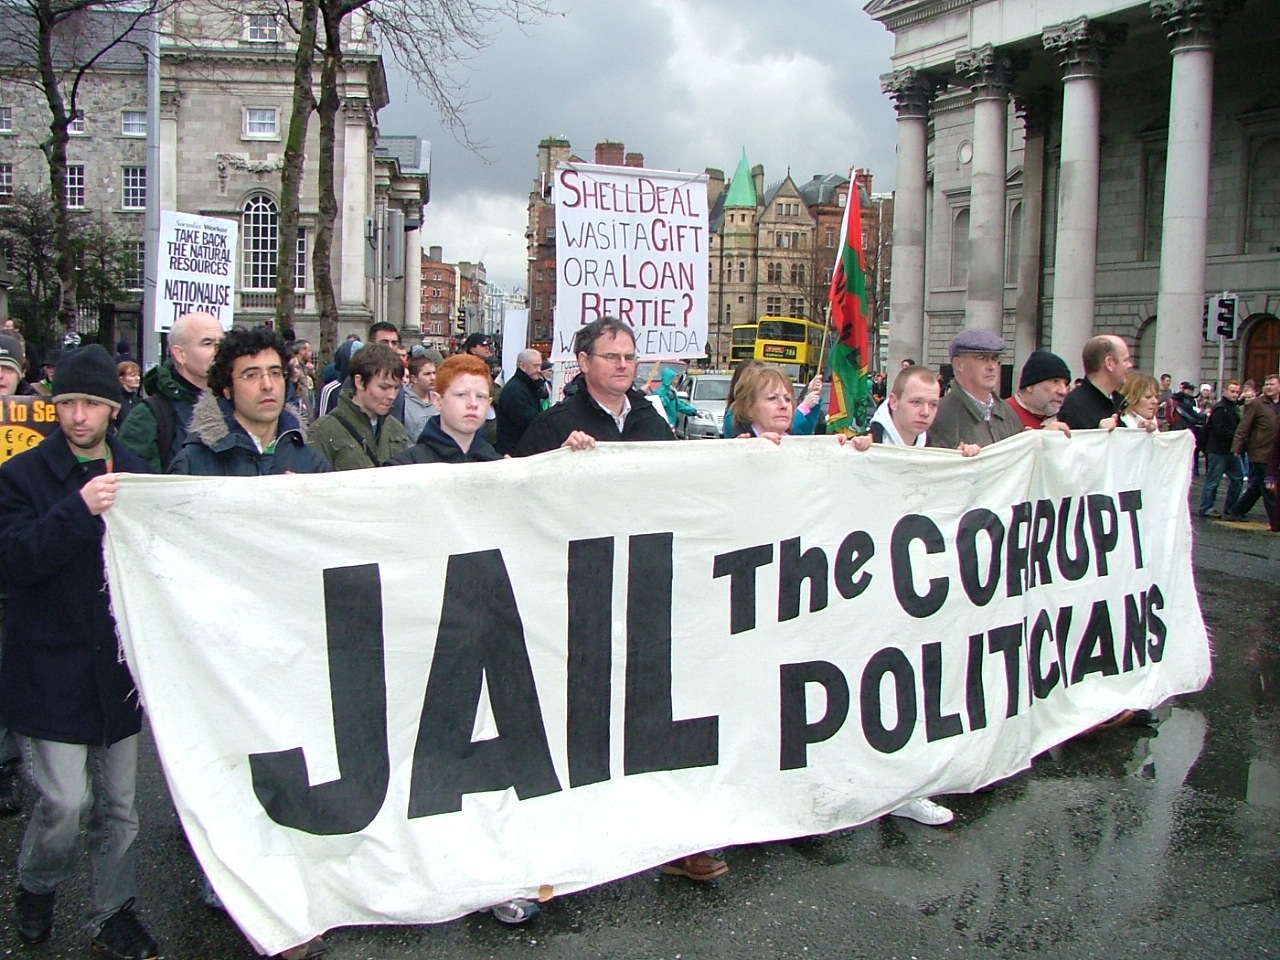 http://www.indymedia.ie/attachments/feb2007/jail_the_corrupt_politicians.jpg